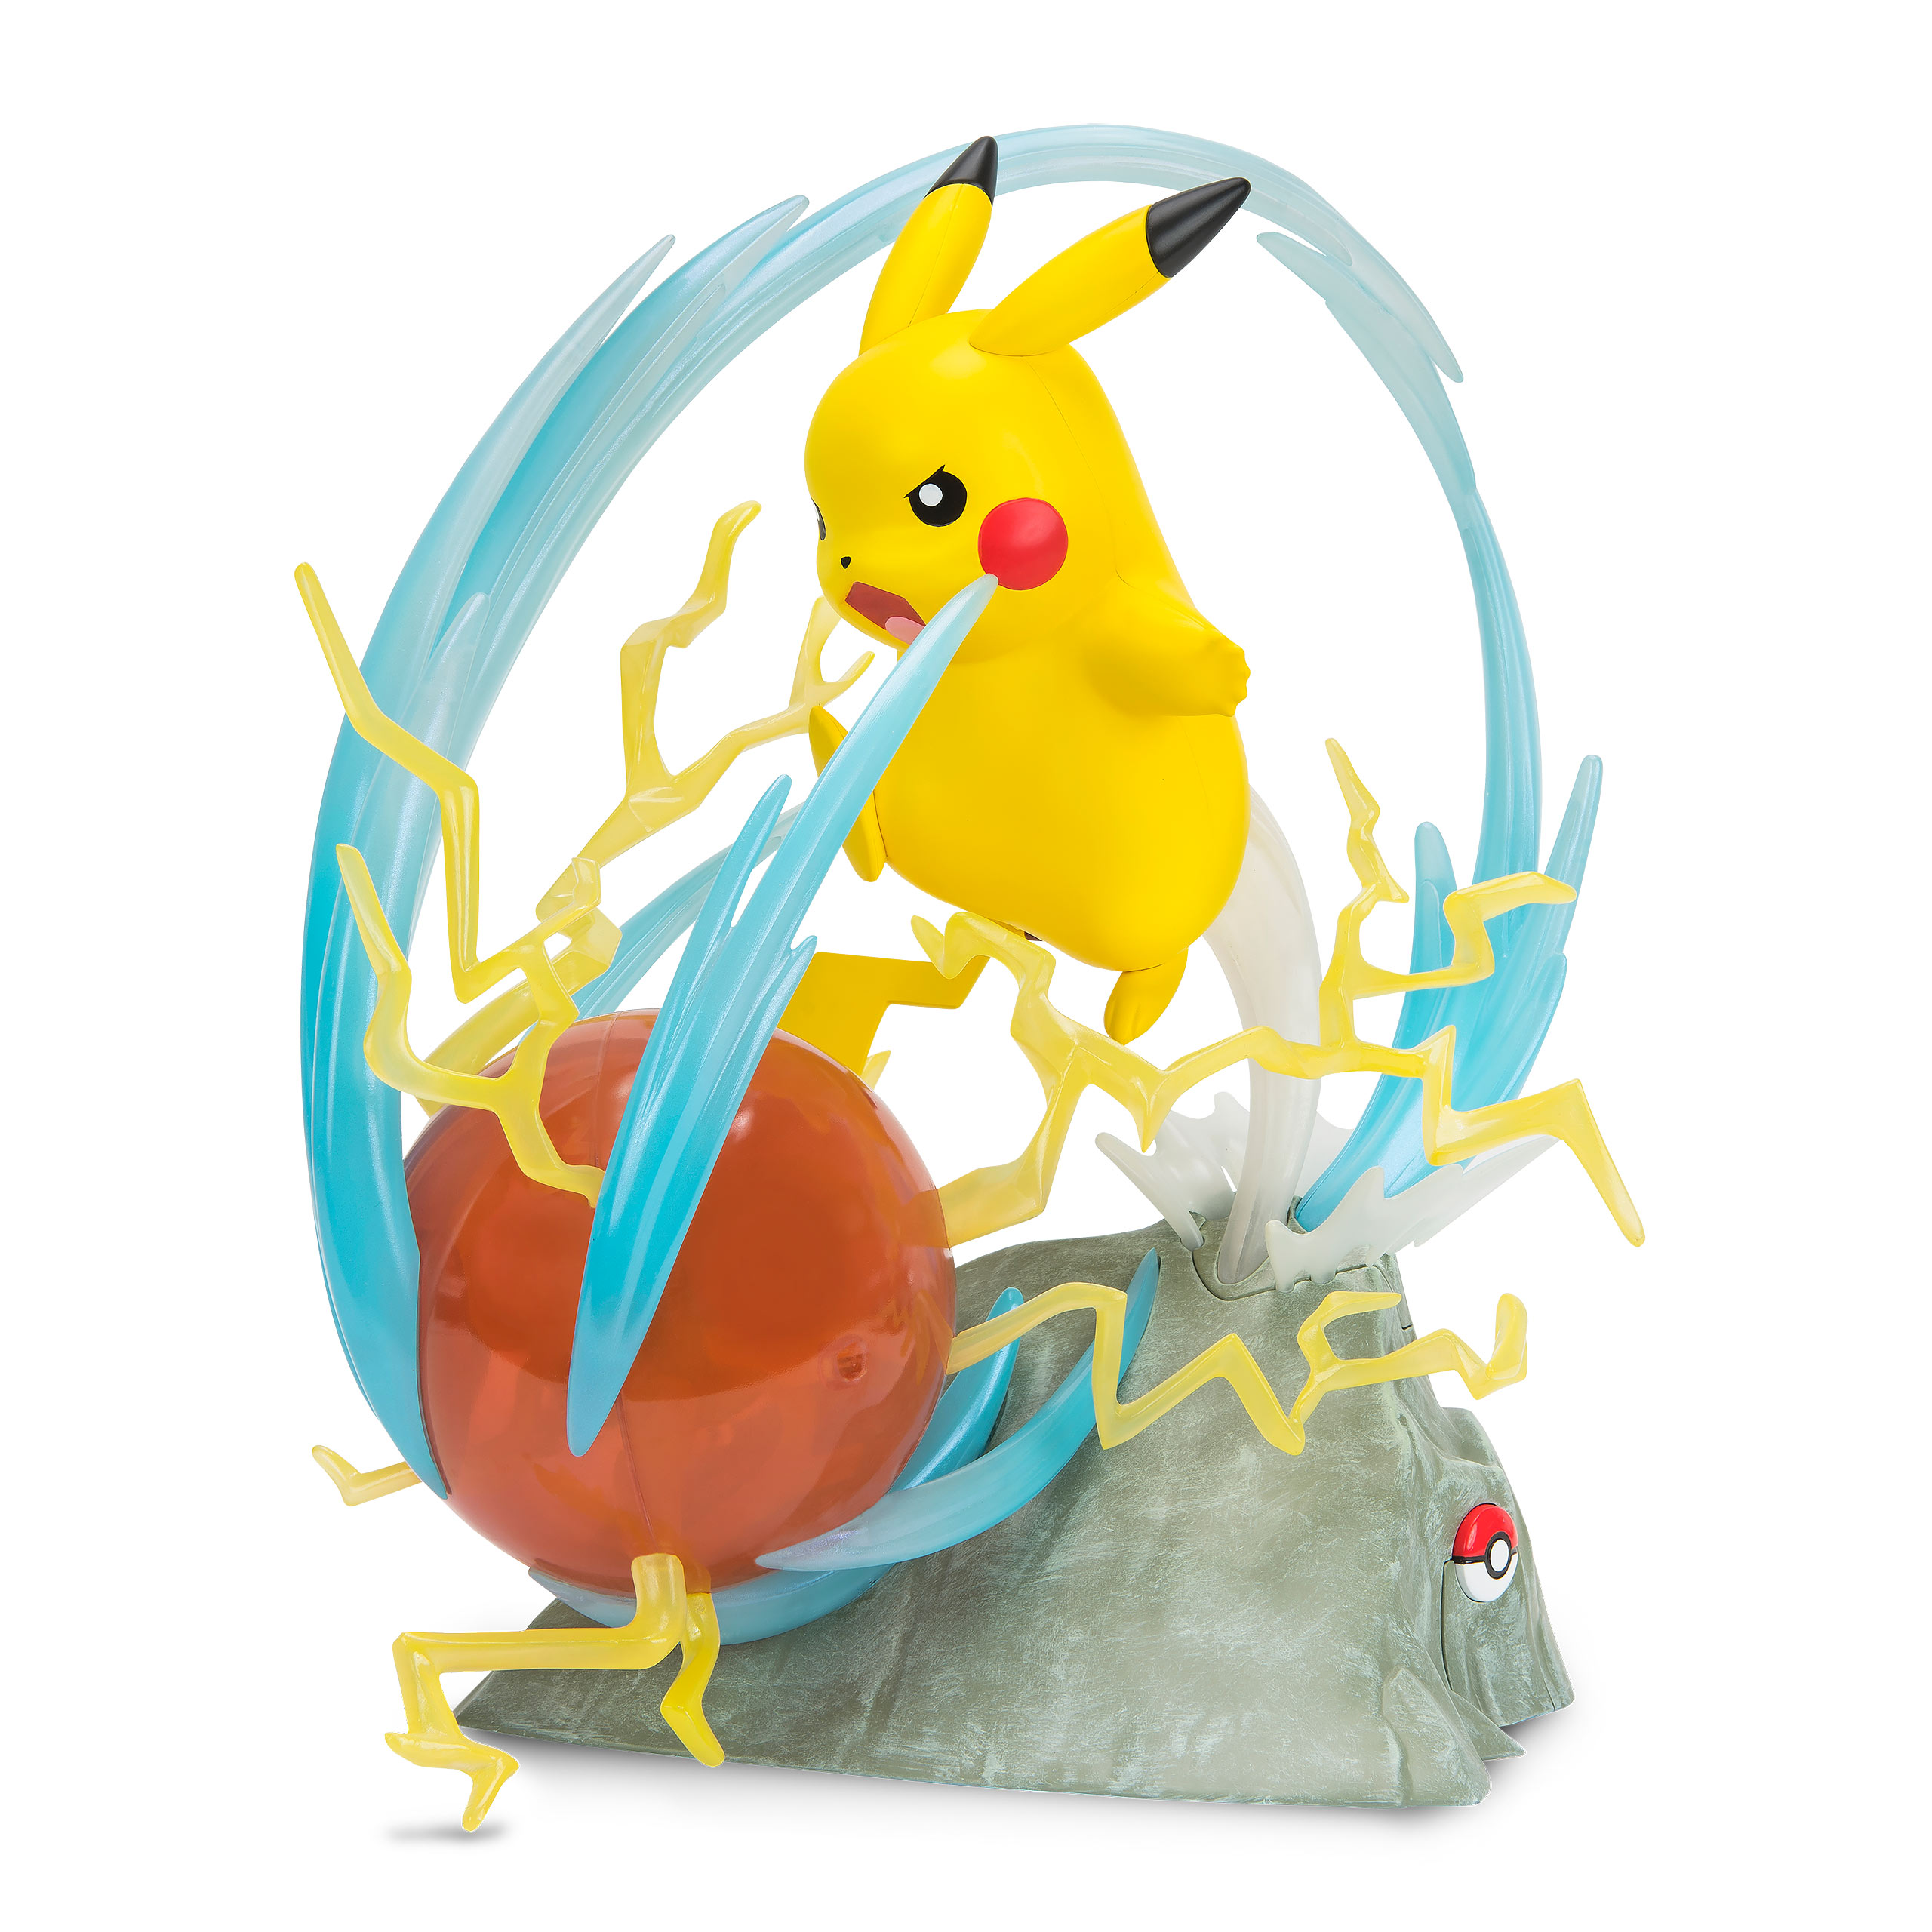 Pokemon - Pikachu Jubiläum Statue Deluxe mit Leuchtfunktion 32 cm